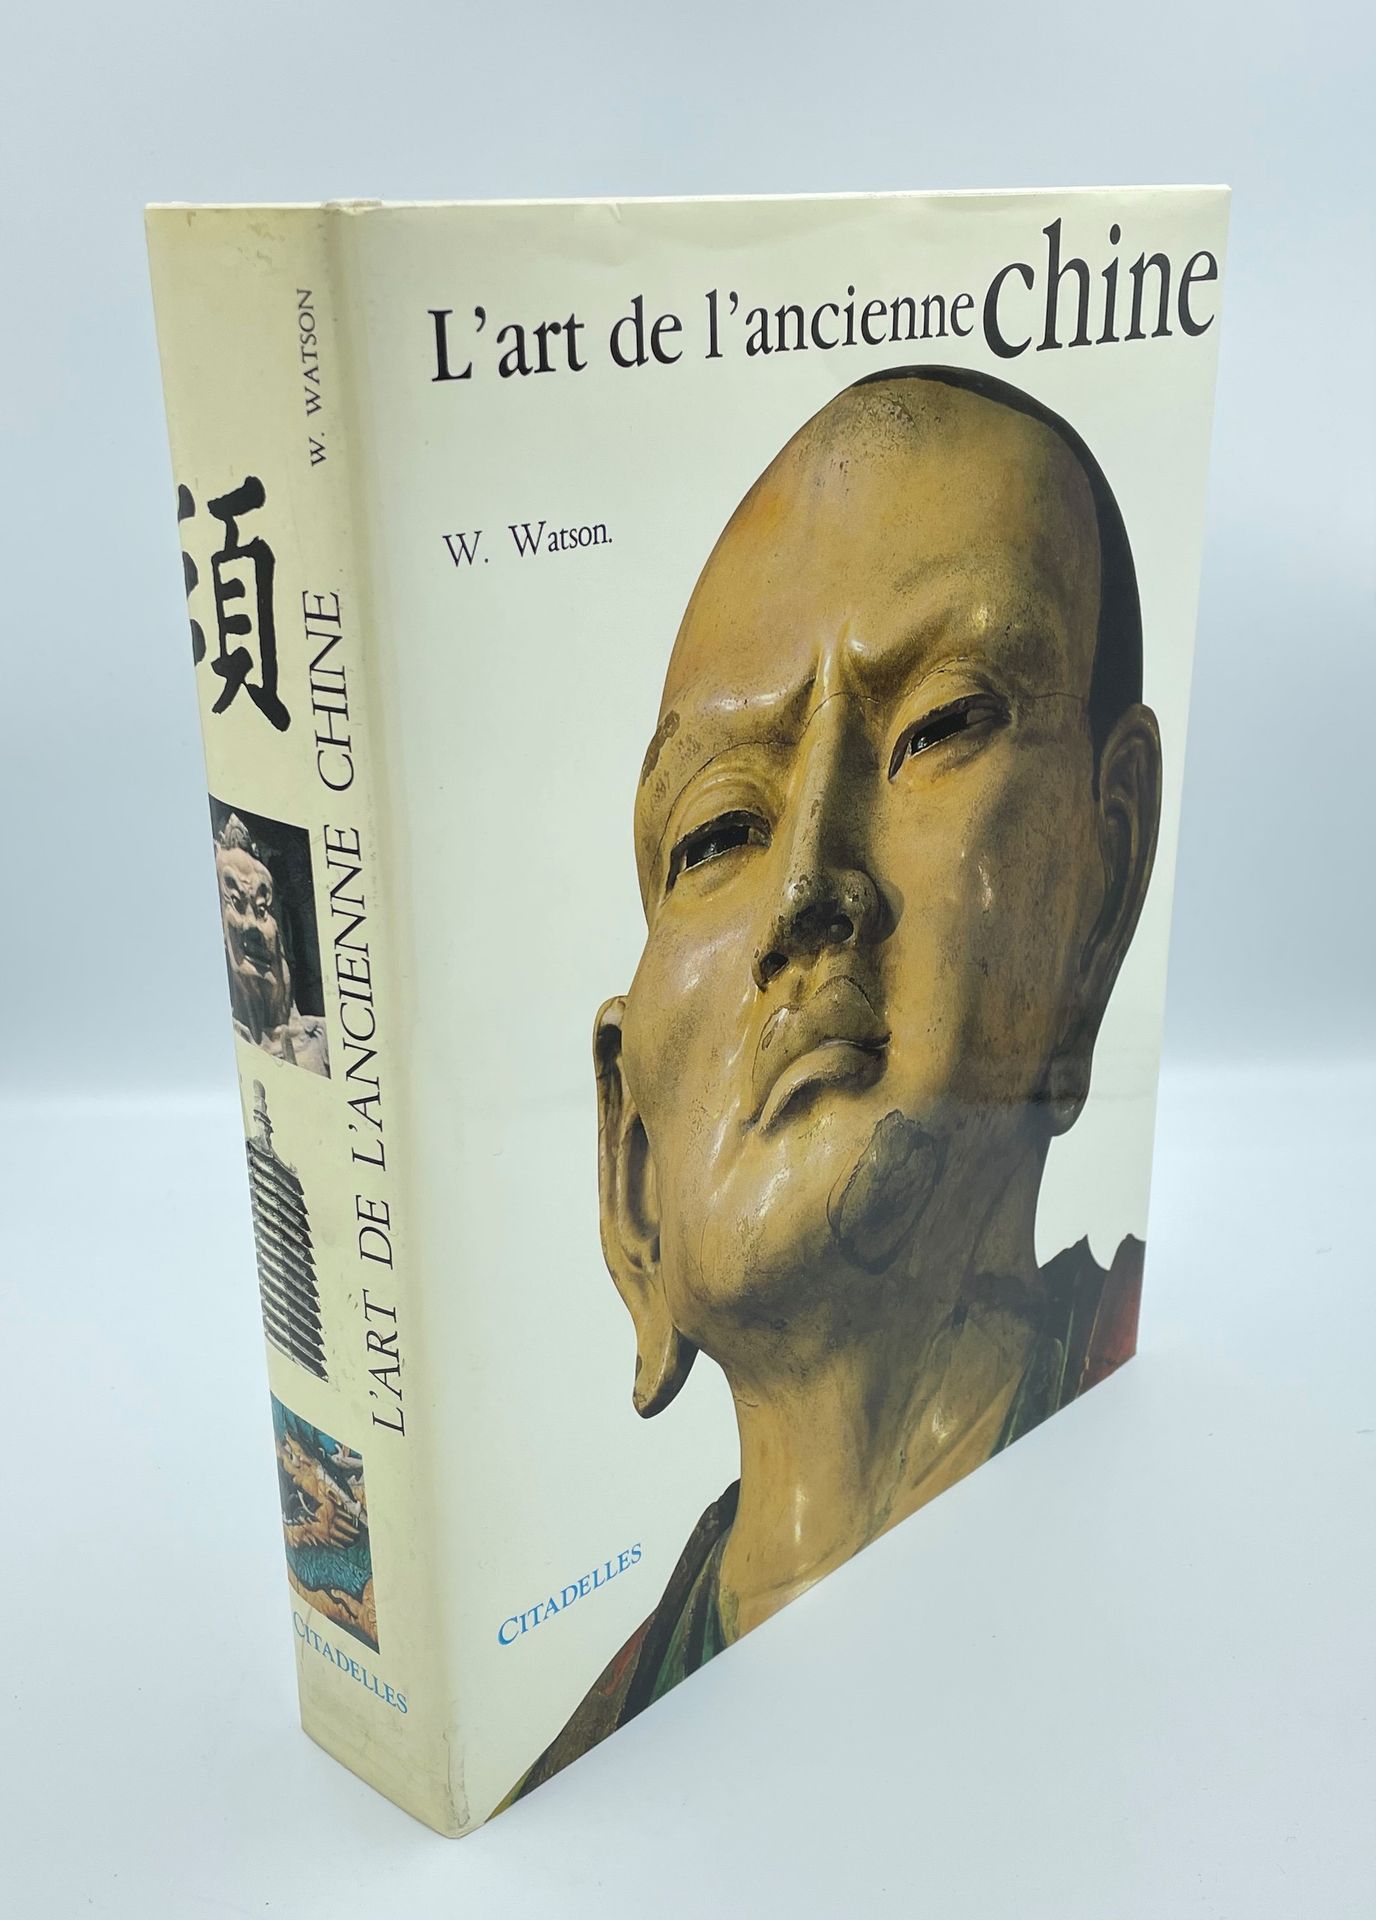 Null CITADELLES, W. WATSON, The Art of Ancient China, 1979年